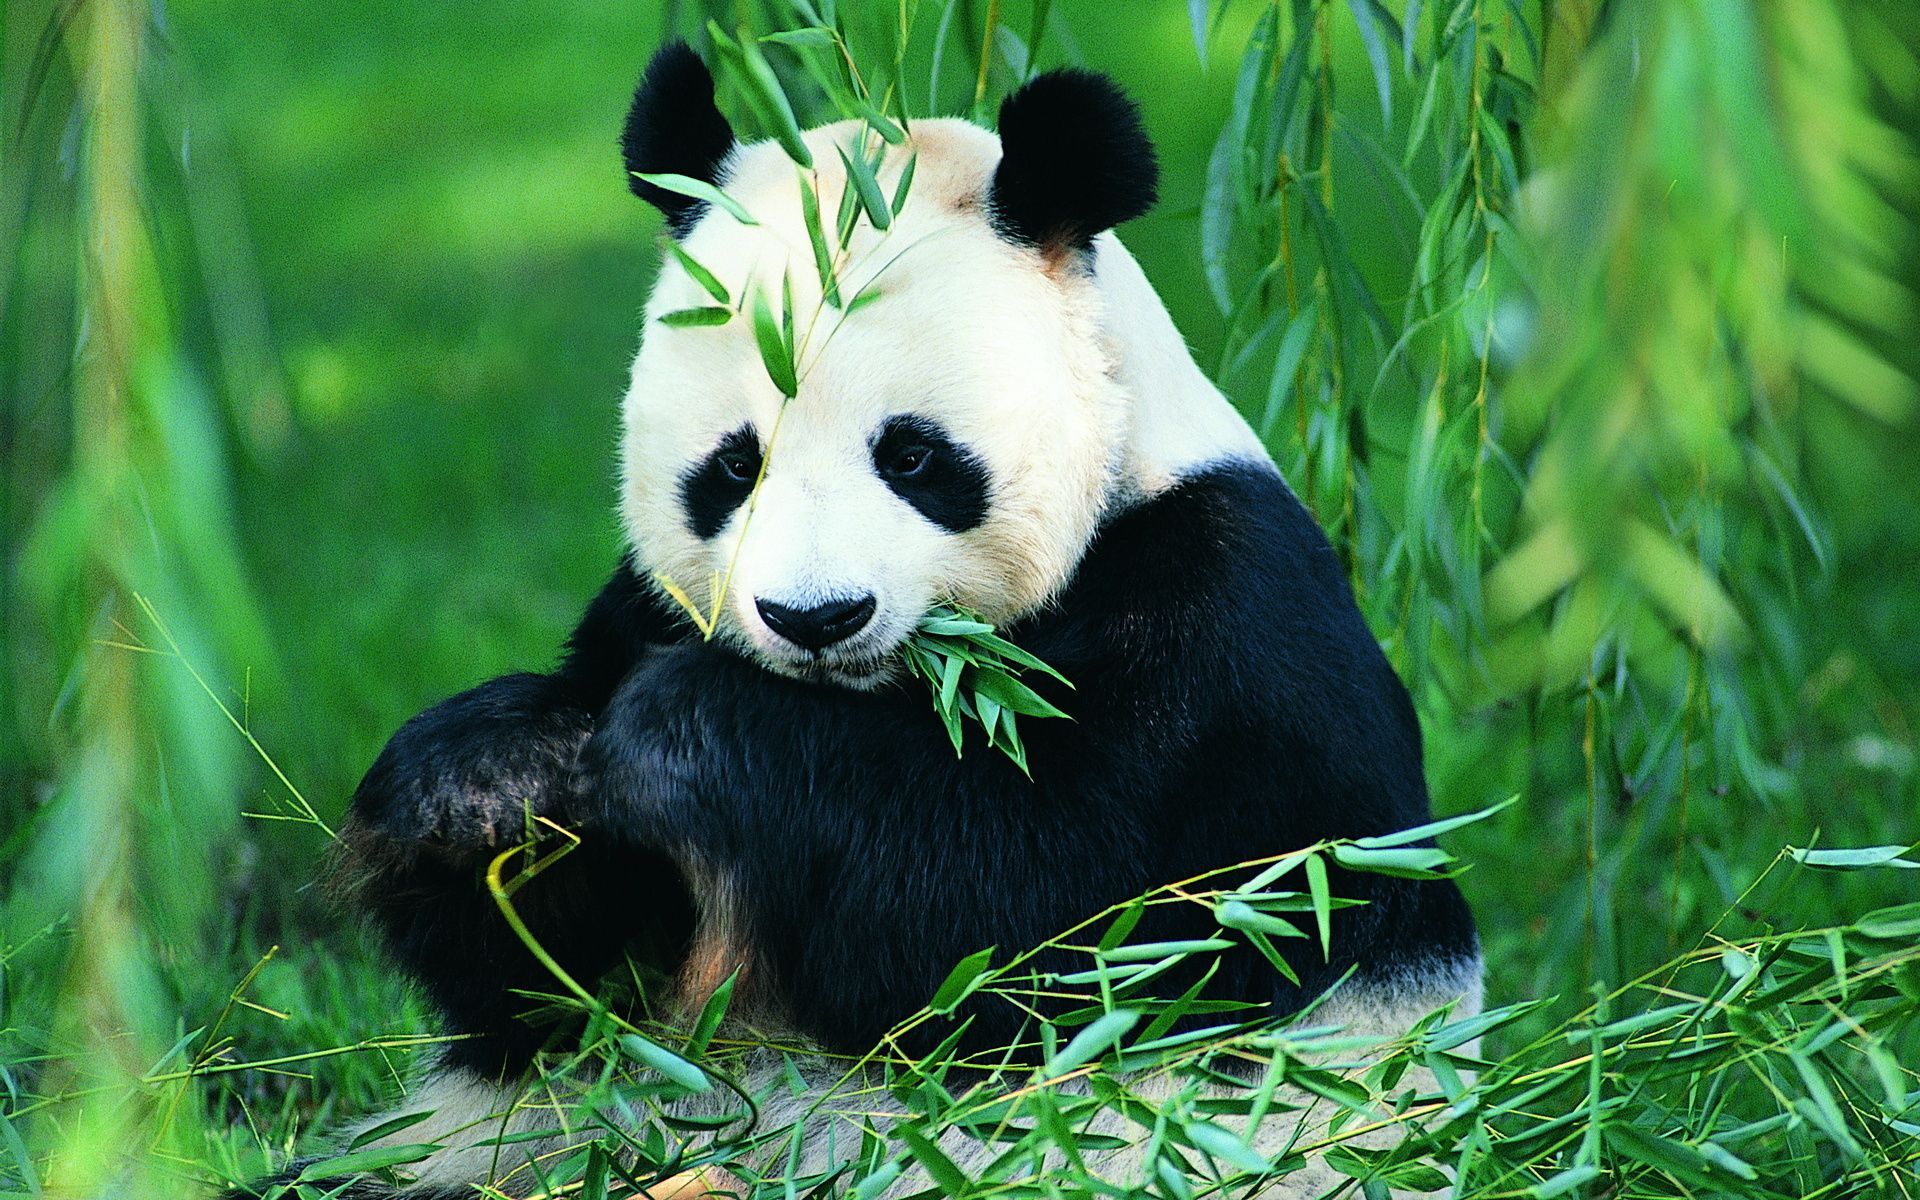 A panda bear sitting in the grass eating - Panda